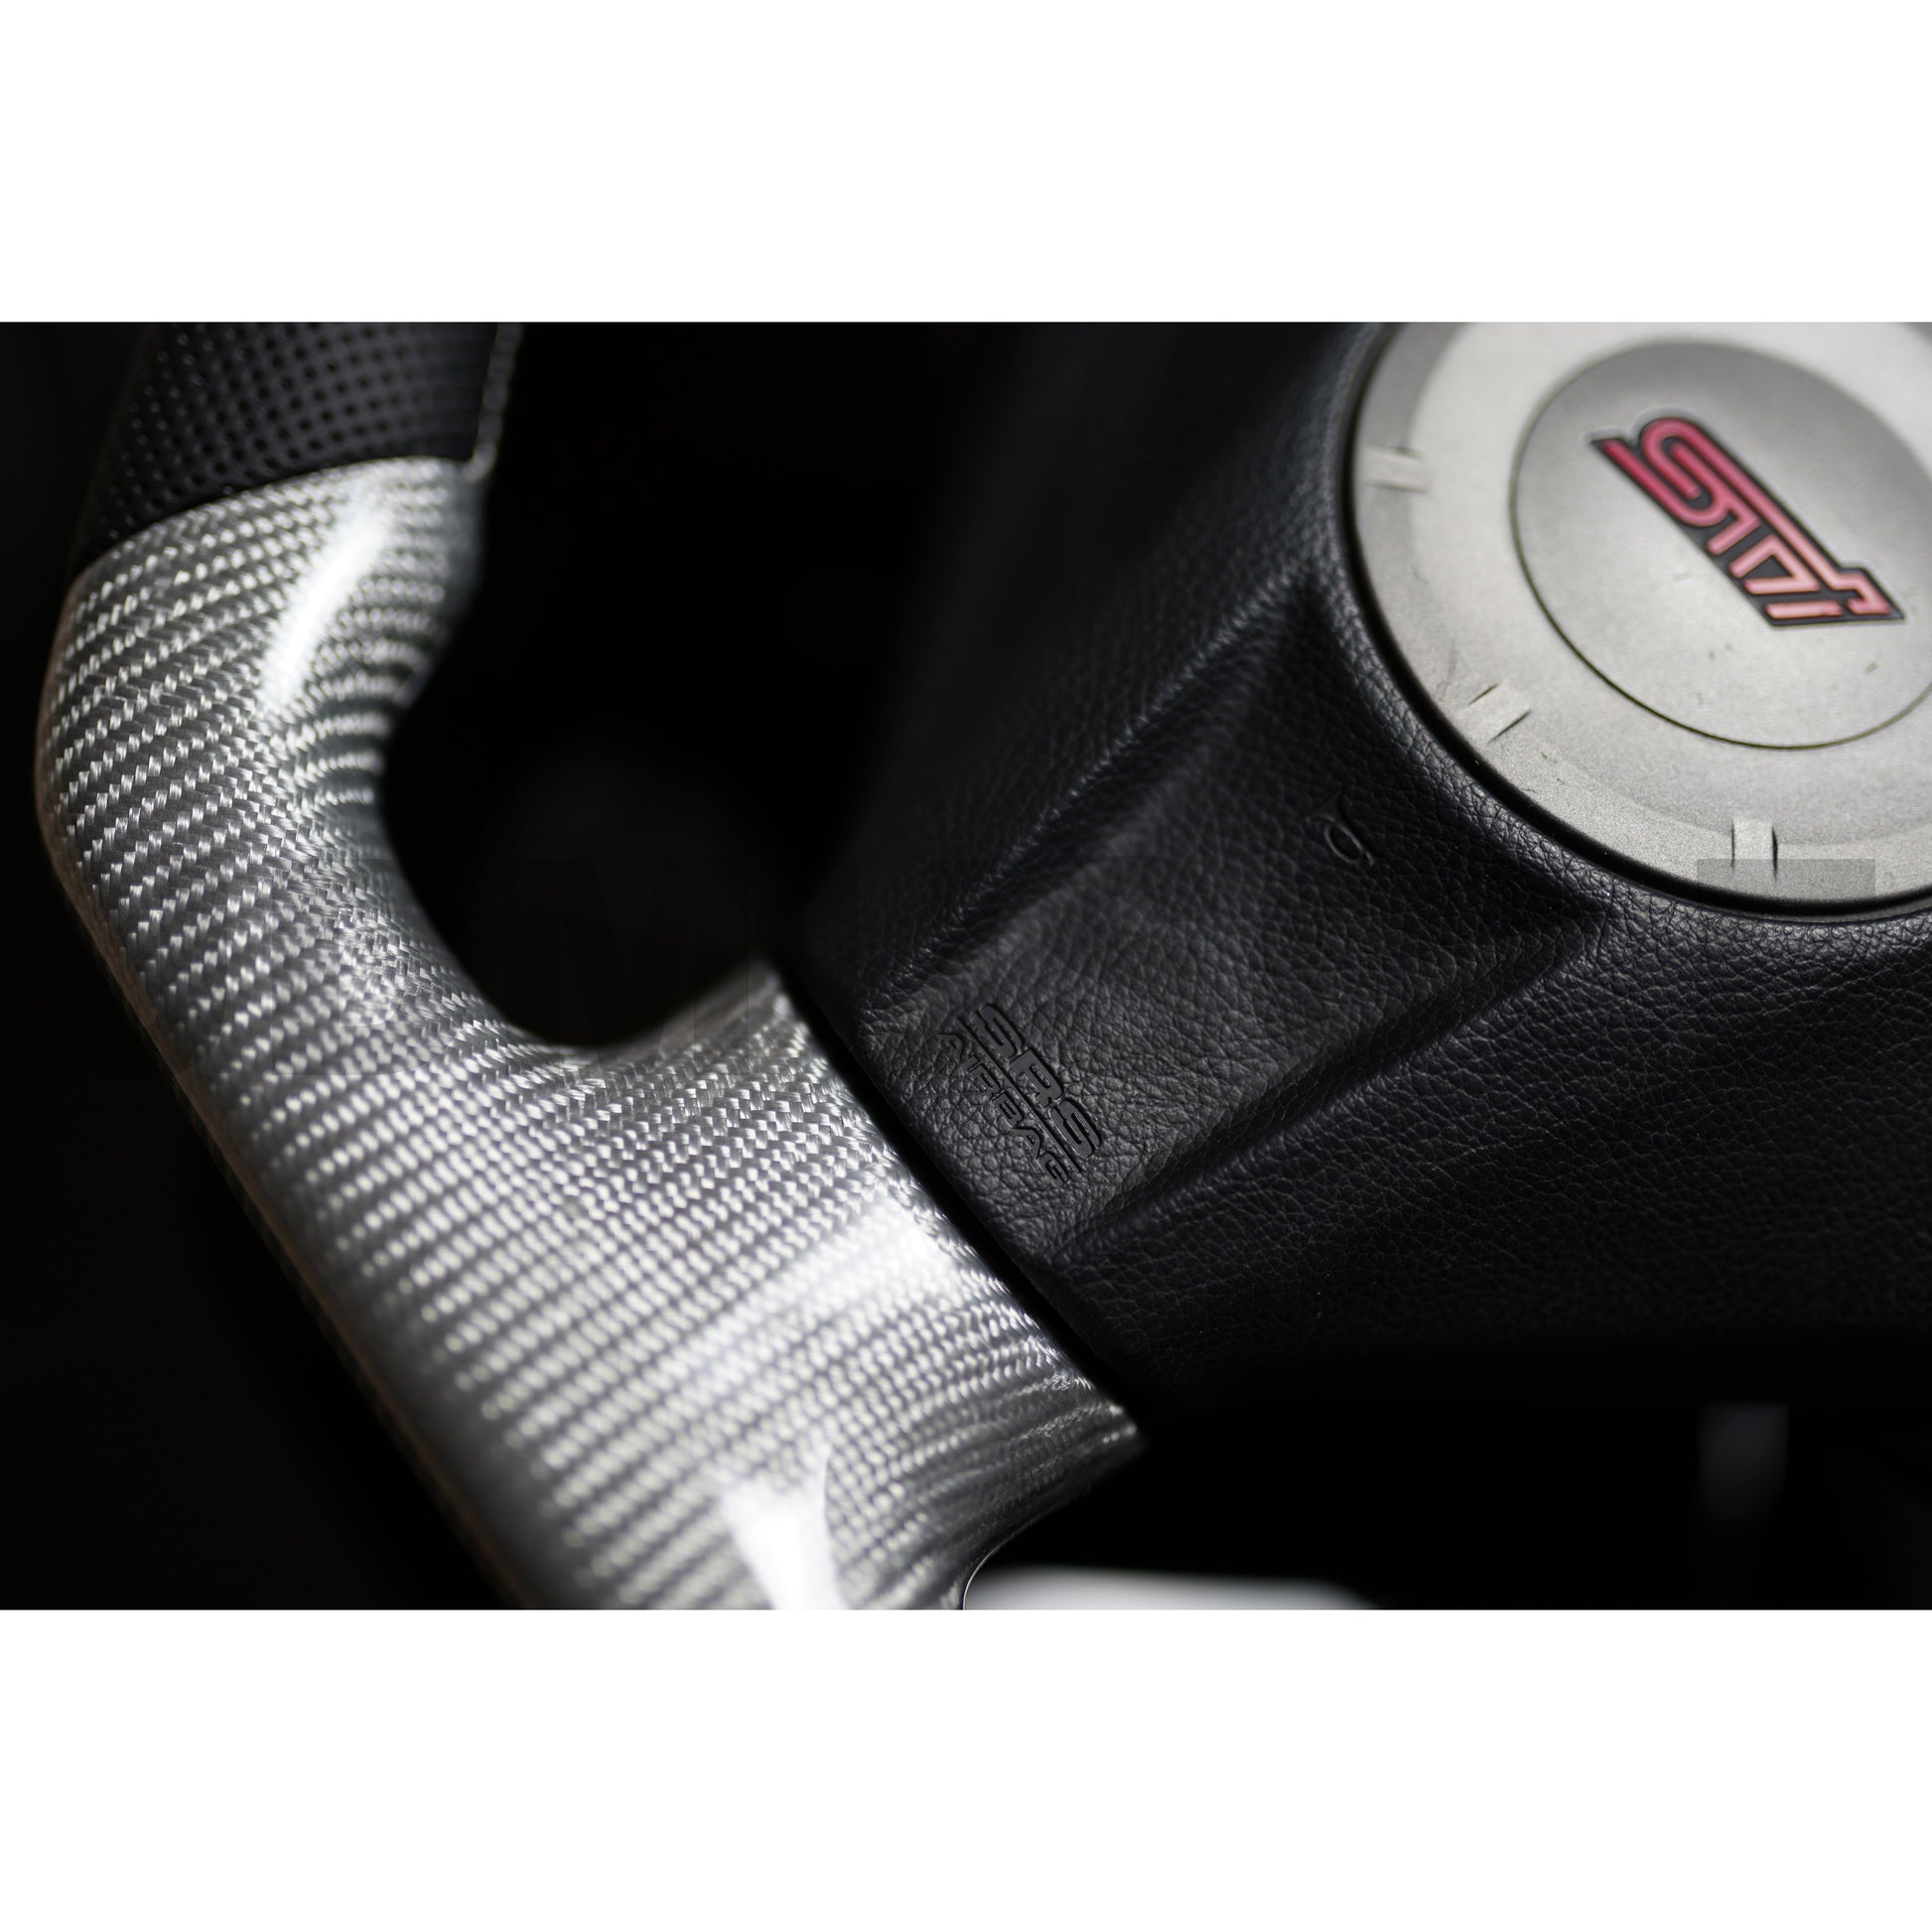 JDMuscle Custom Carbon Fiber Steering Wheel for 2008-2014 WRX/STI *(OPEN BOX) *Silver CF w/ Black Perf. Leather & white stiching-Steering Wheels-JDMuscle-JDMuscle